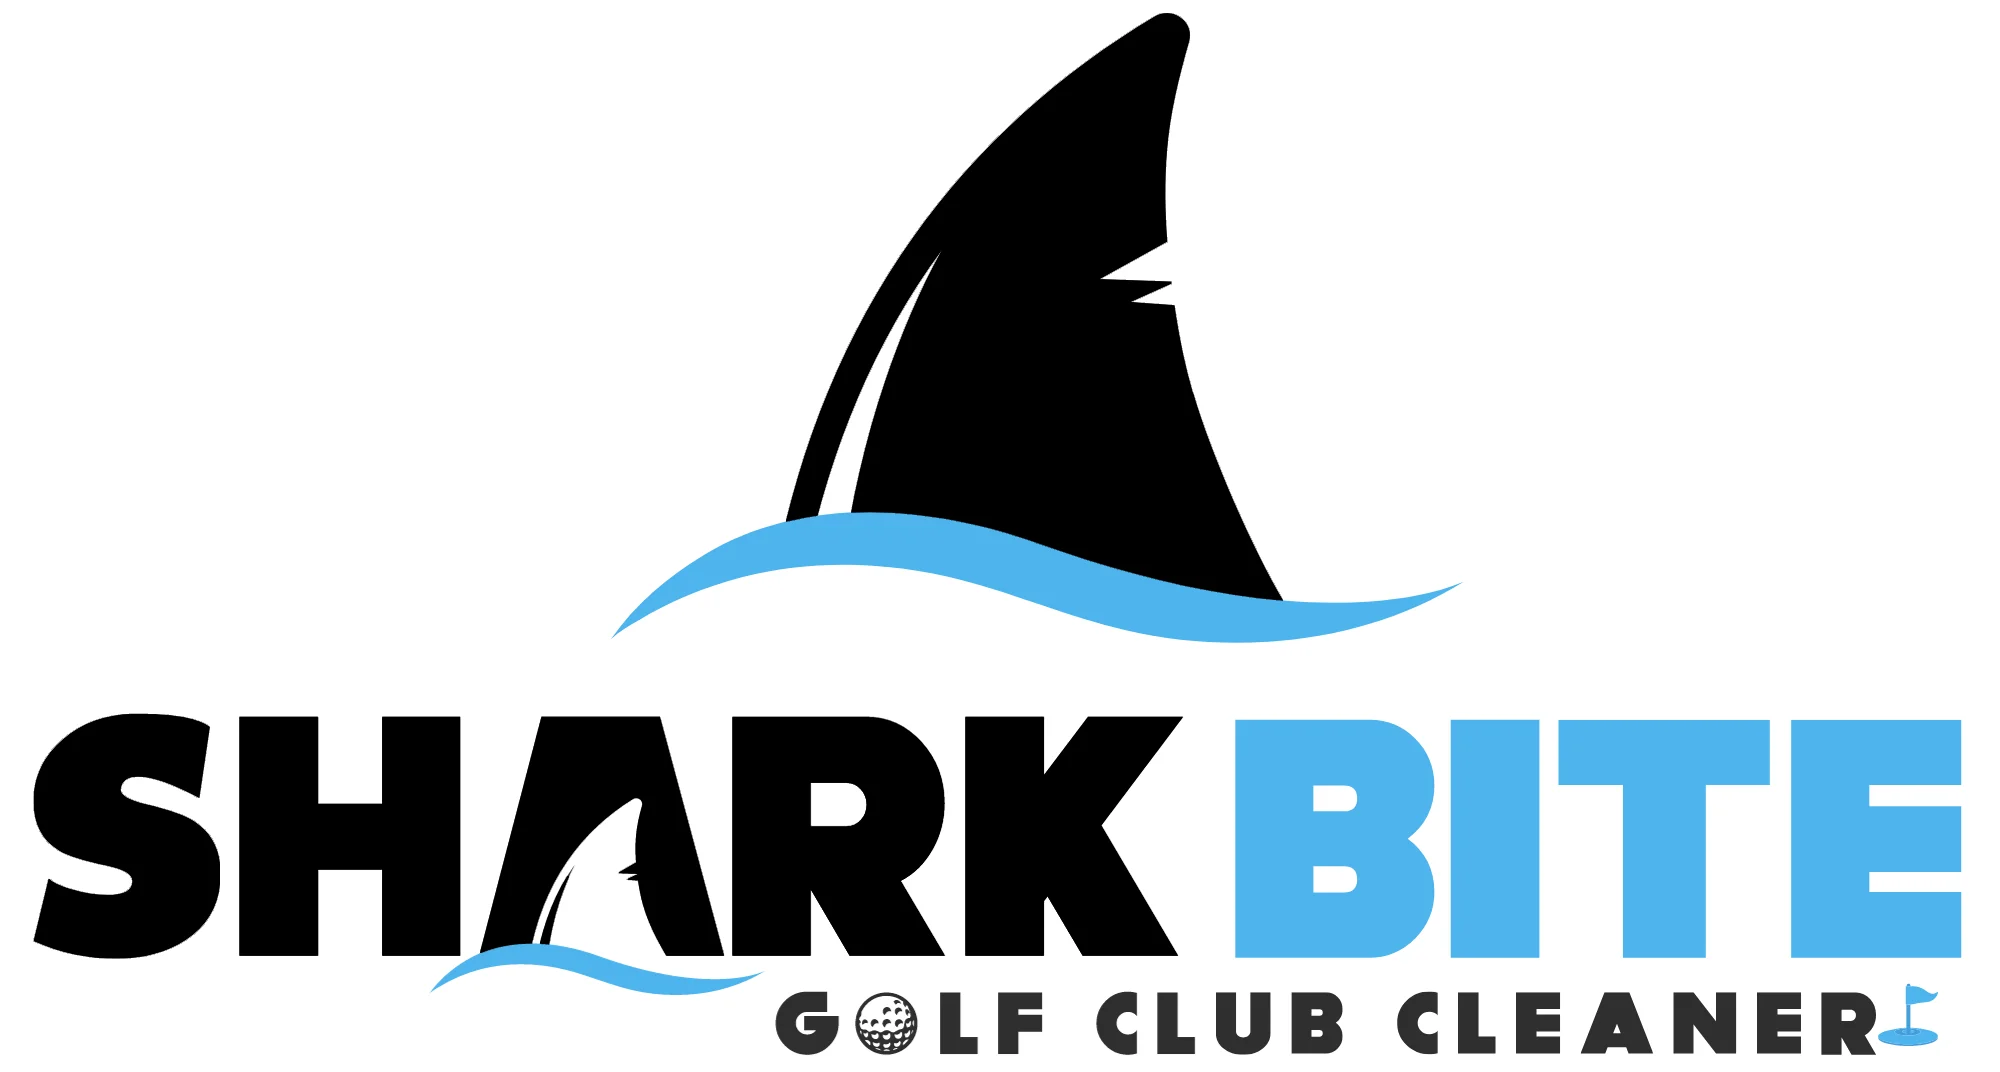 Shark Bite Golf